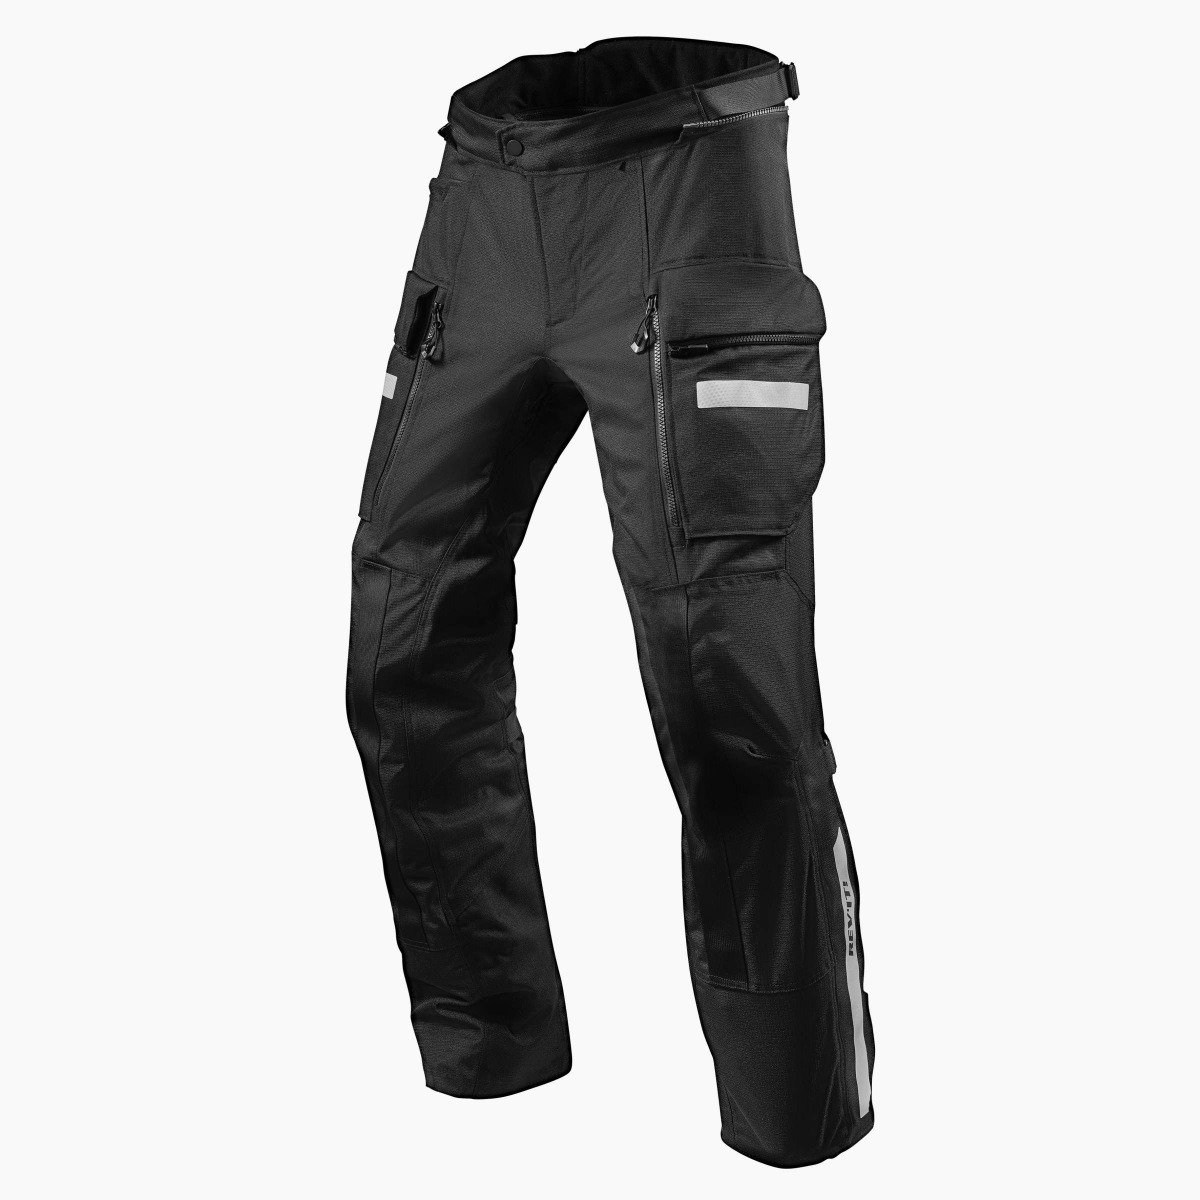 Image of REV'IT! Sand 4 H2O Standard Black Motorcycle Pants Size 3XL EN